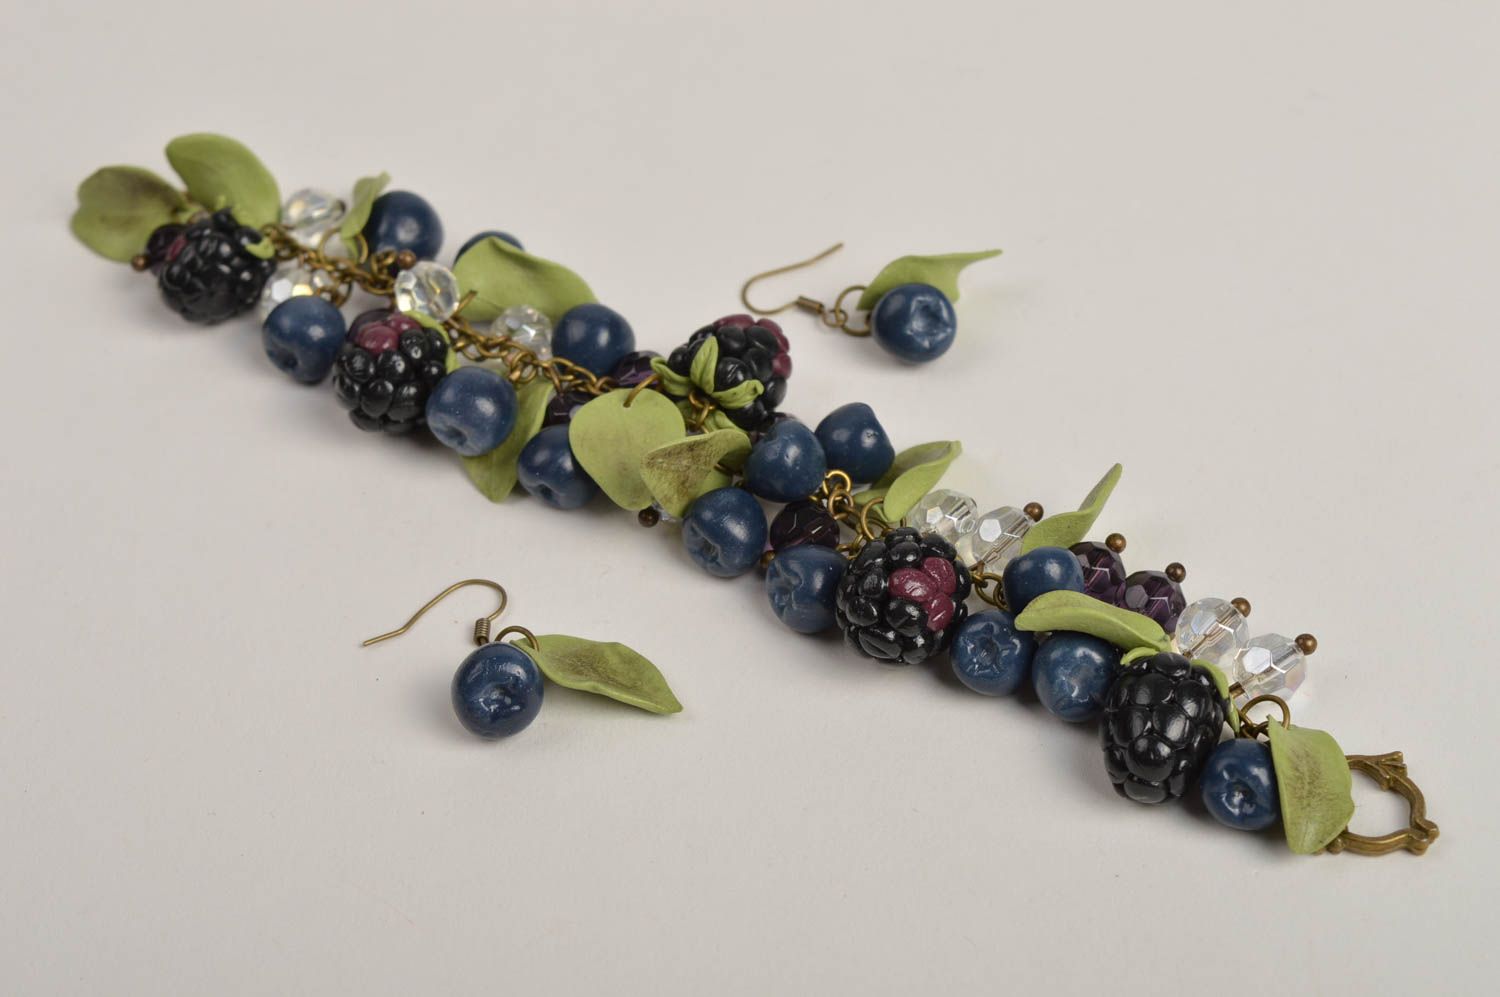 Wrist bracelet fashion earrings polymer clay jewelry forest berry women jewelry photo 5